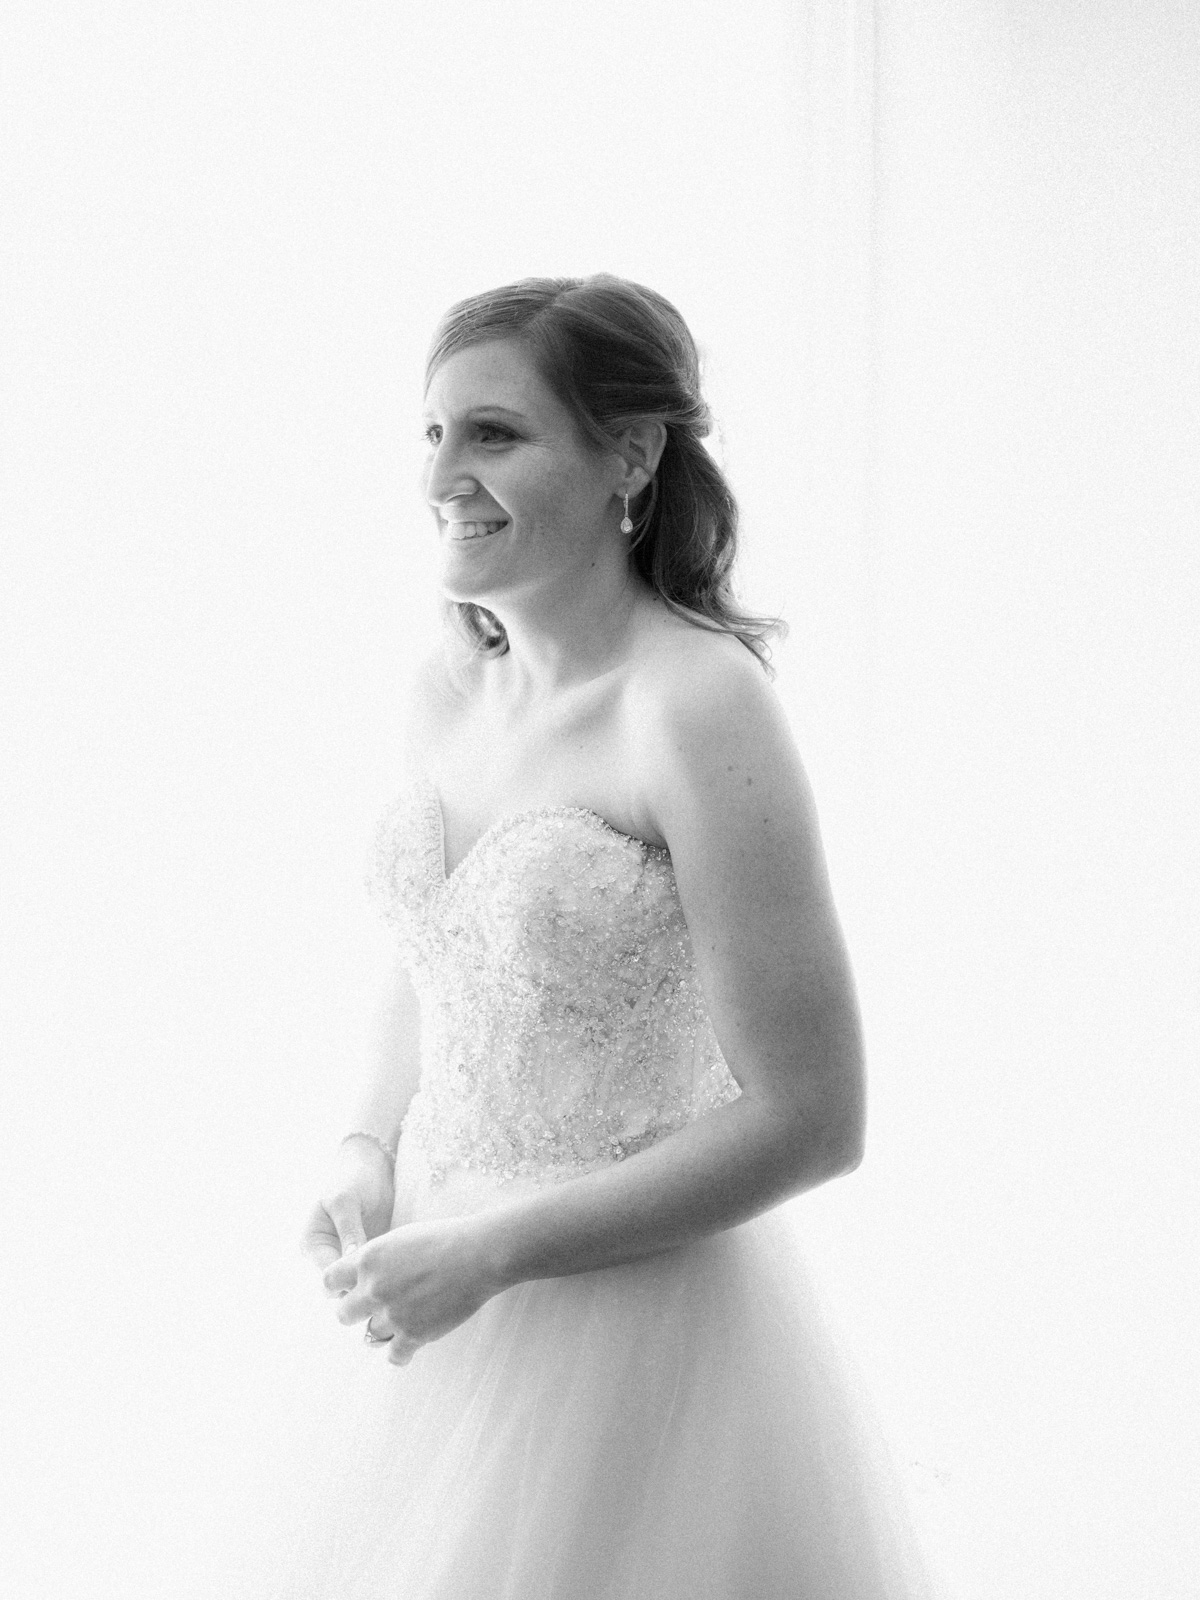 Classic bridal portrait in black and white